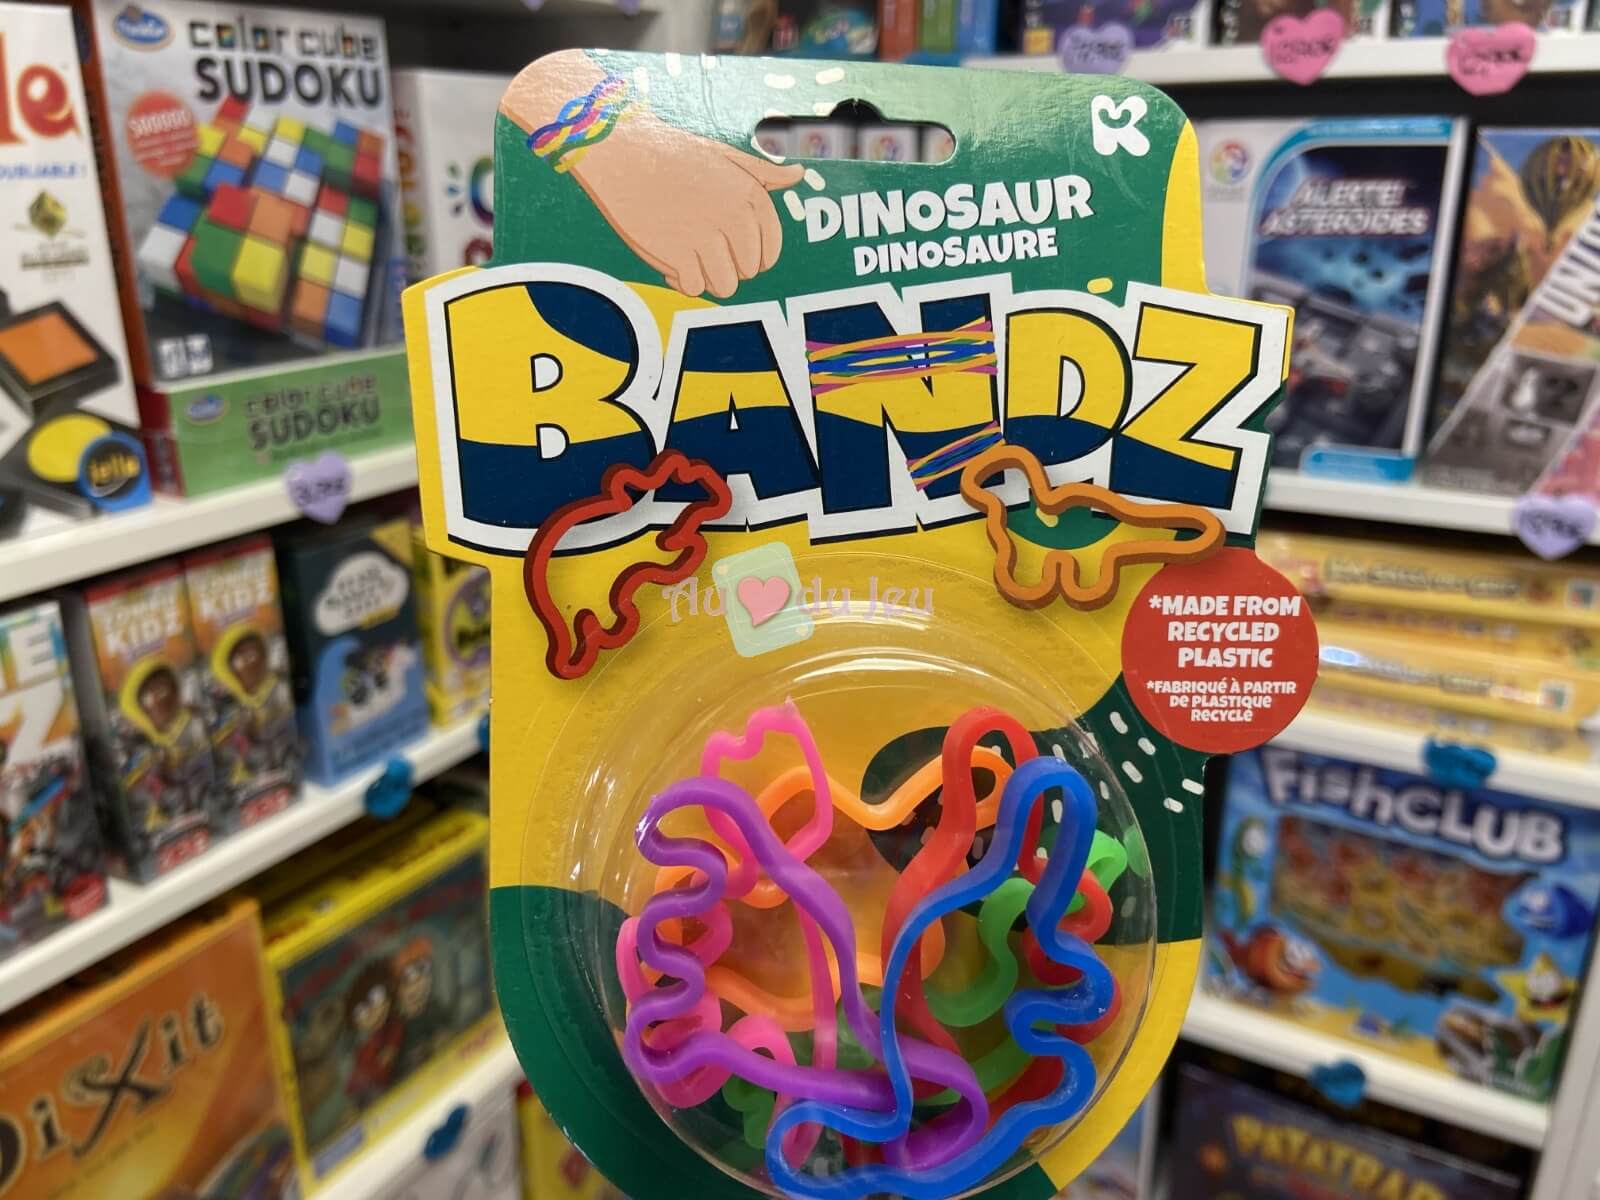 Bracelets Dinosaures Bandz 